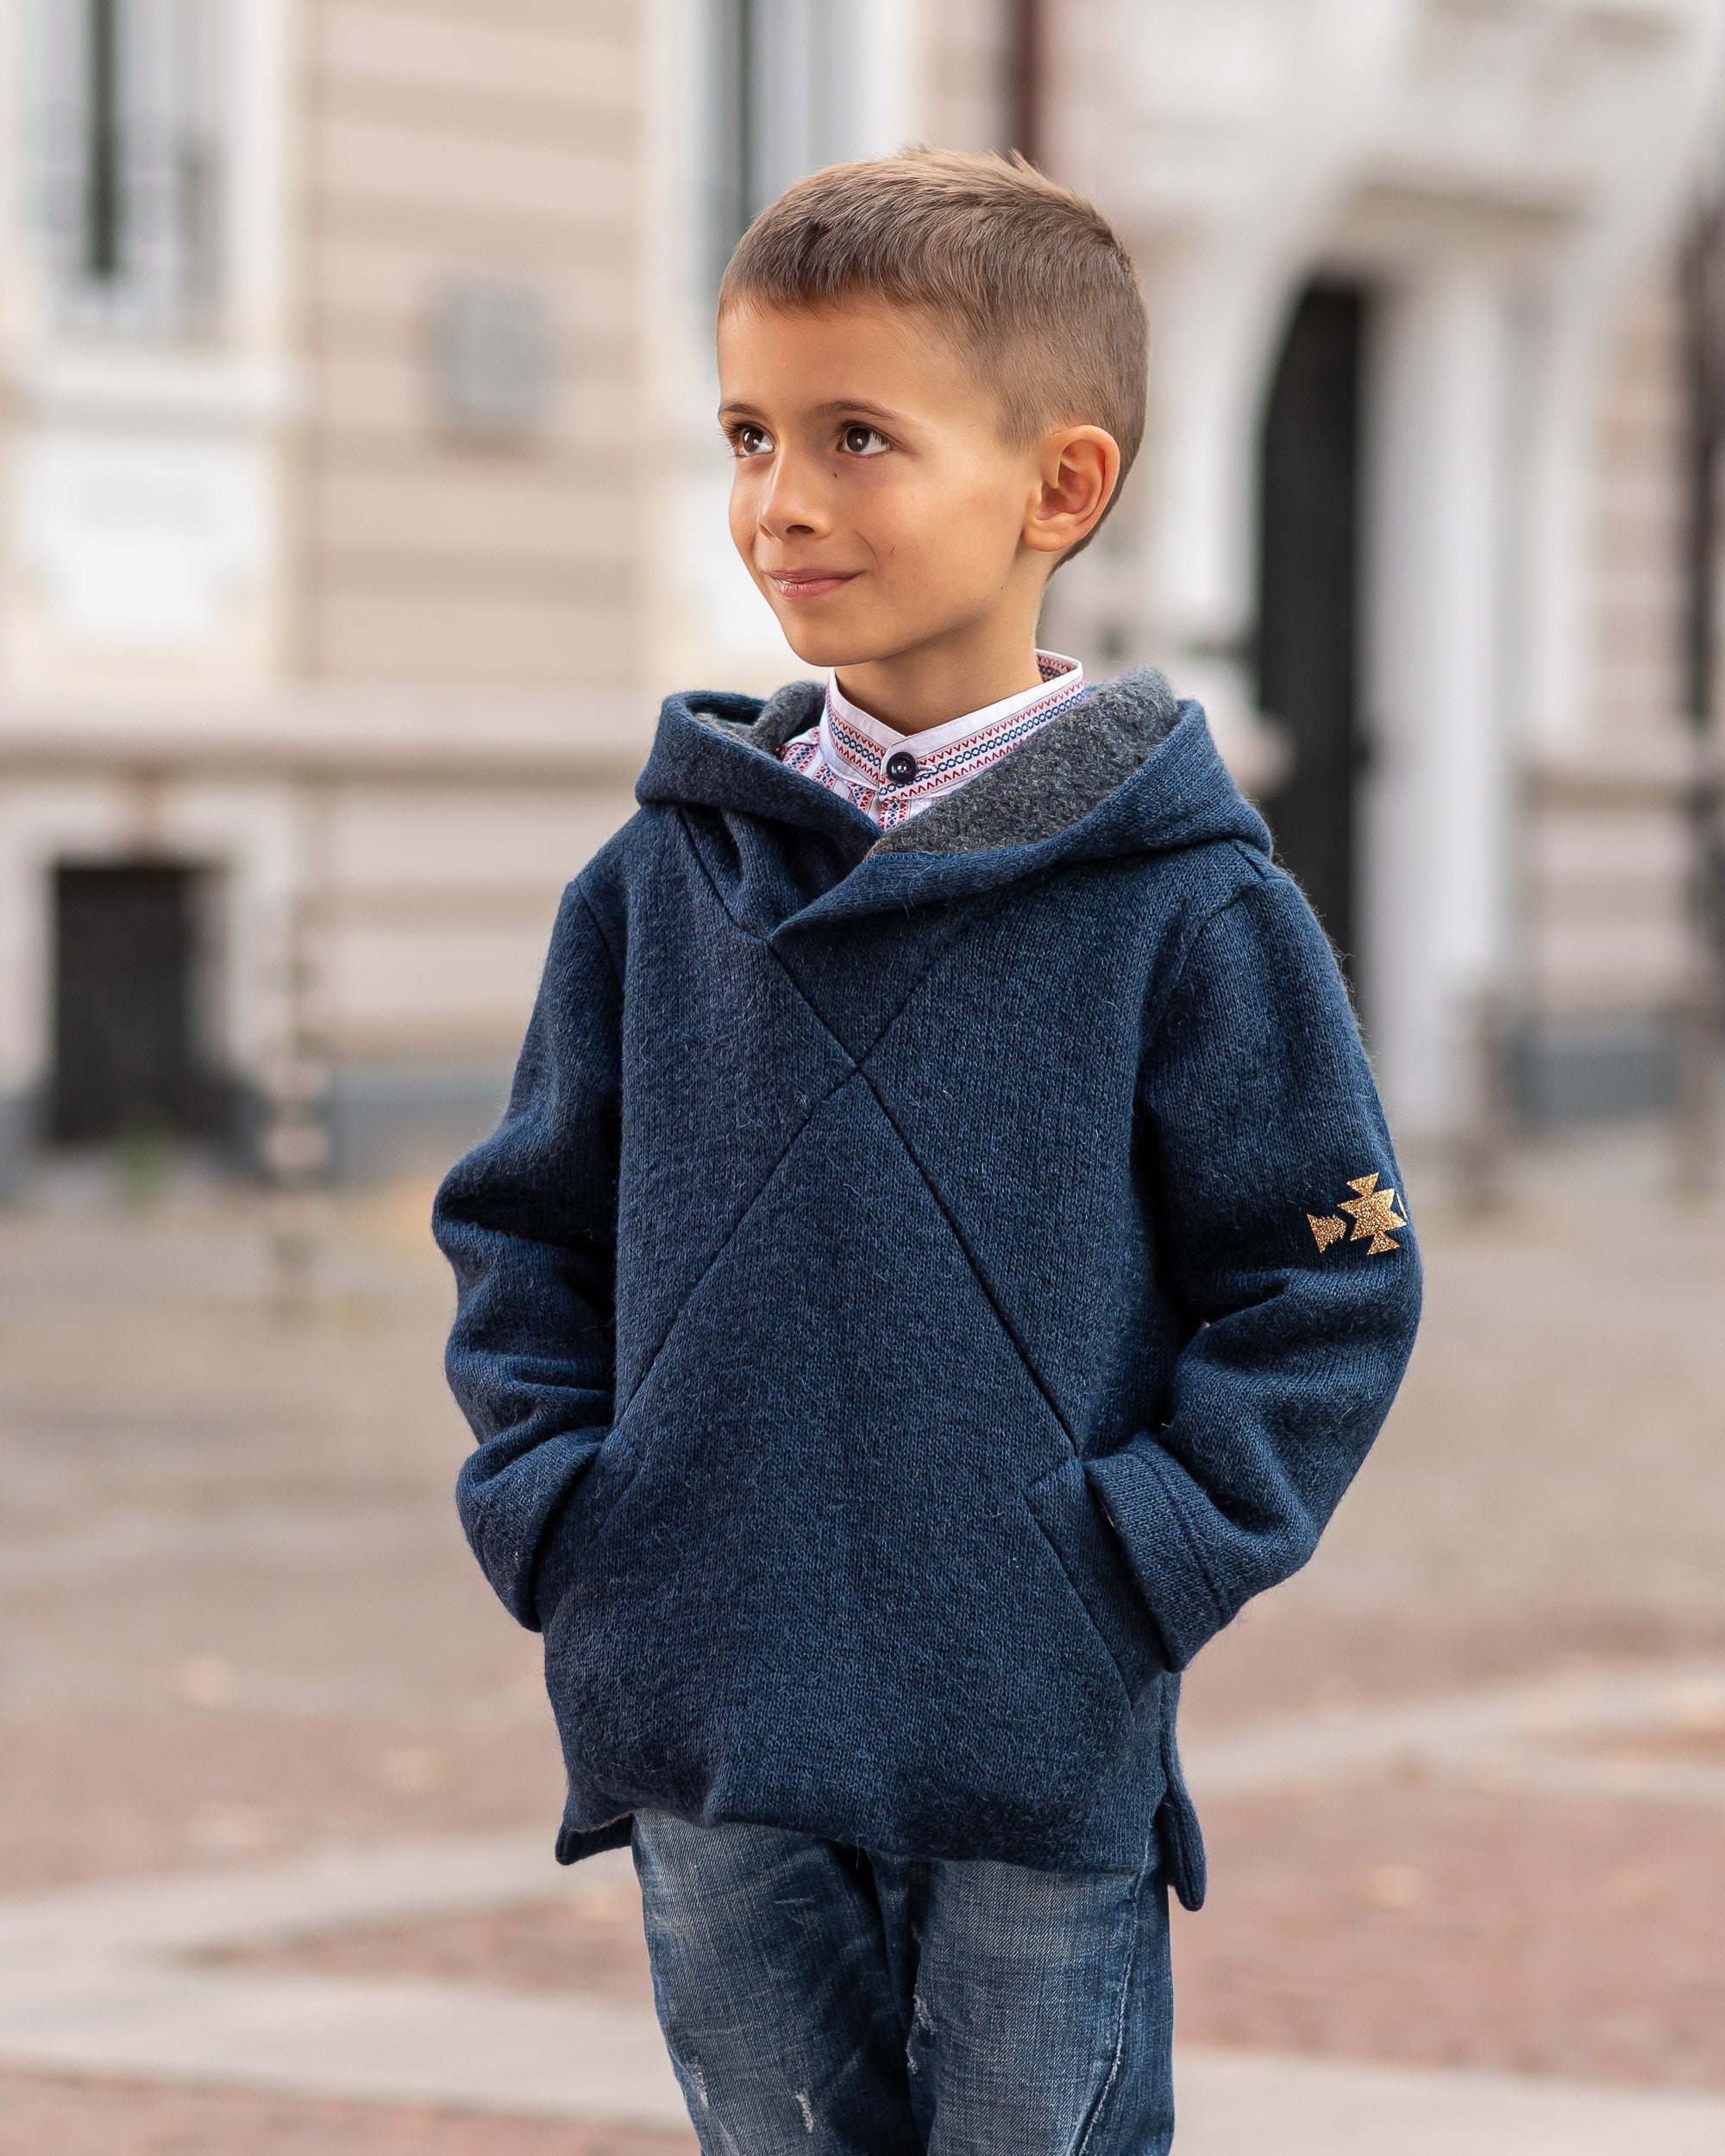 Kids "Hagelslag" Handgebreide wollen trui Kleding Unisex kinderkleding Sweaters 